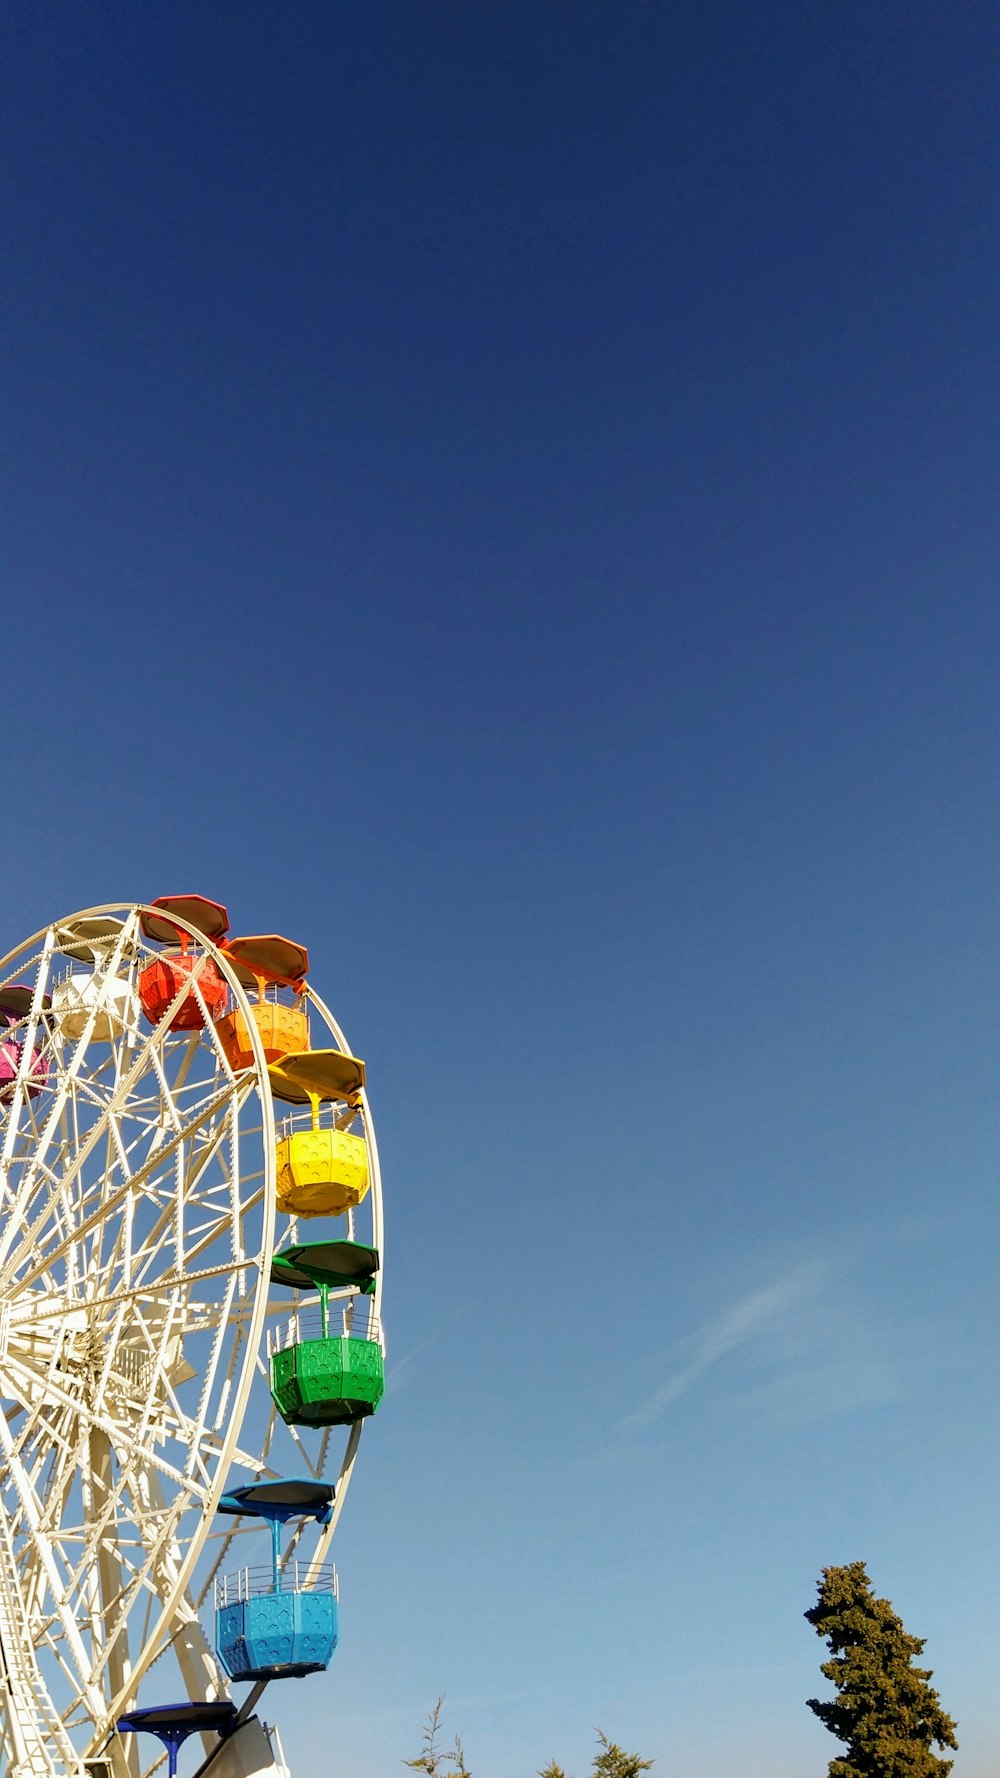 white green and orange ferris wheel under blue sky during daytime